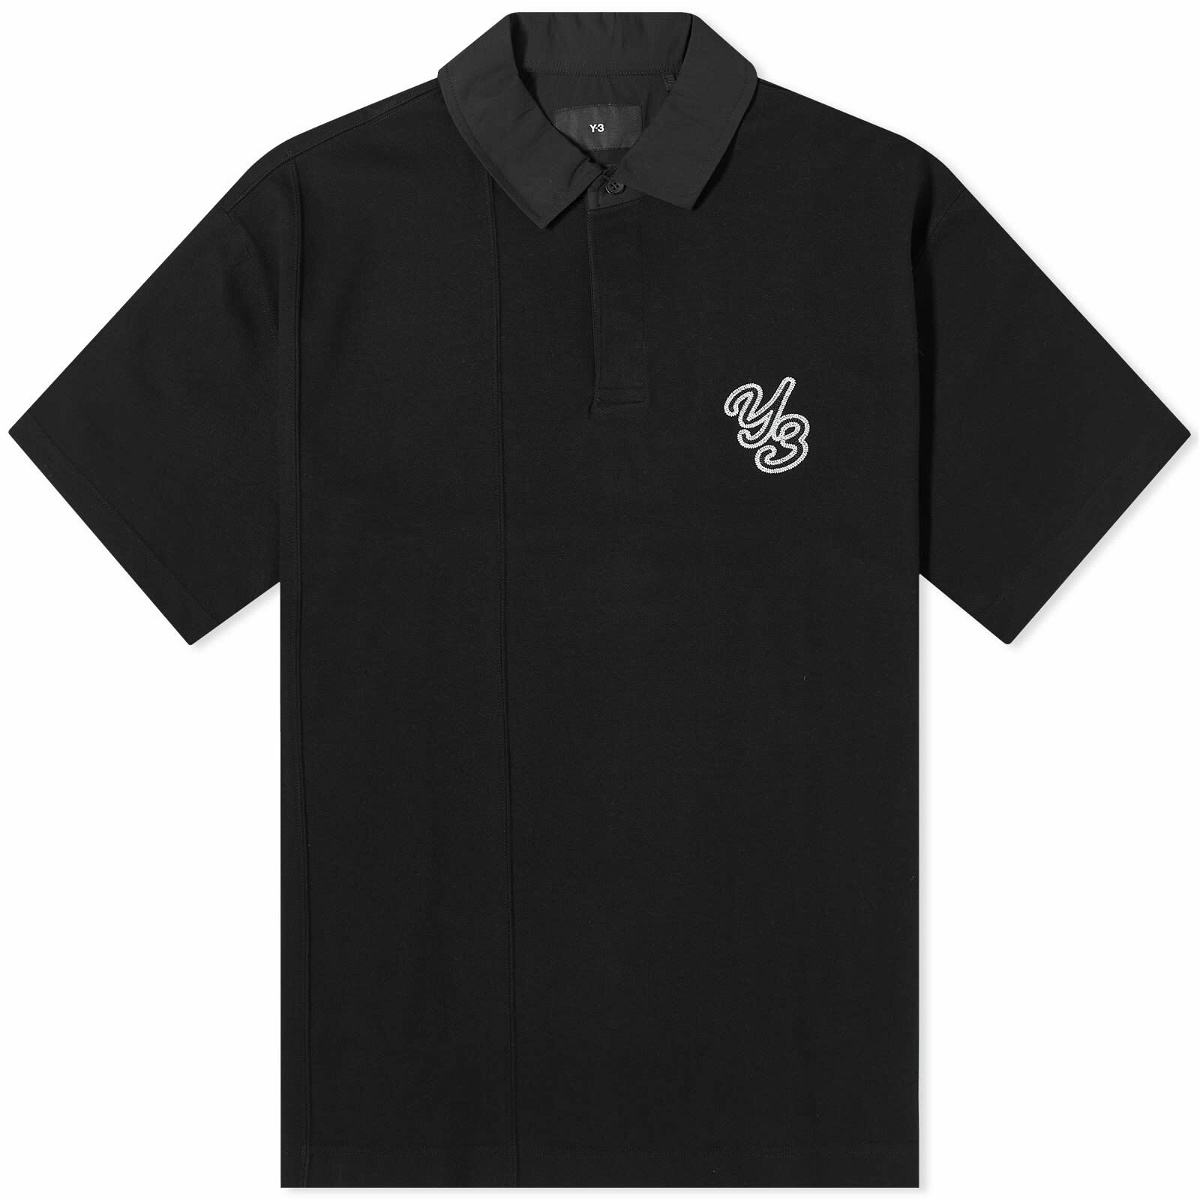 Photo: Y-3 Men's Rugby Short Sleeve Shirt in Black/Black